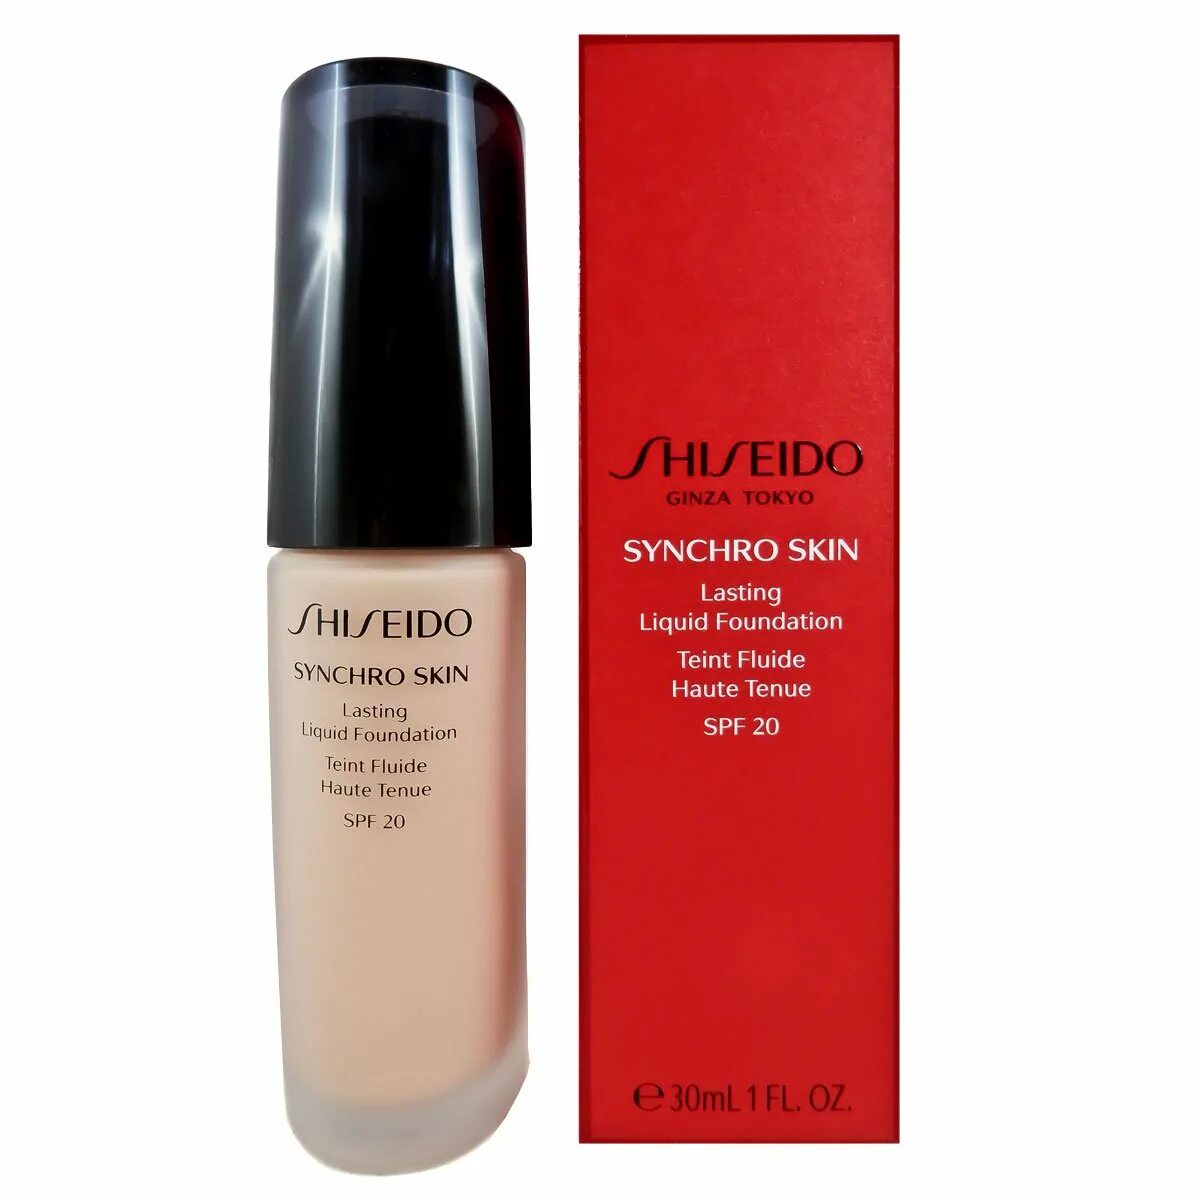 Shiseido Neutral 3 тональный. Тональный шисейдо Synchro Skin. Shiseido lasting Liquid Foundation. Shiseido Synchro Skin lasting Liquid Foundation.